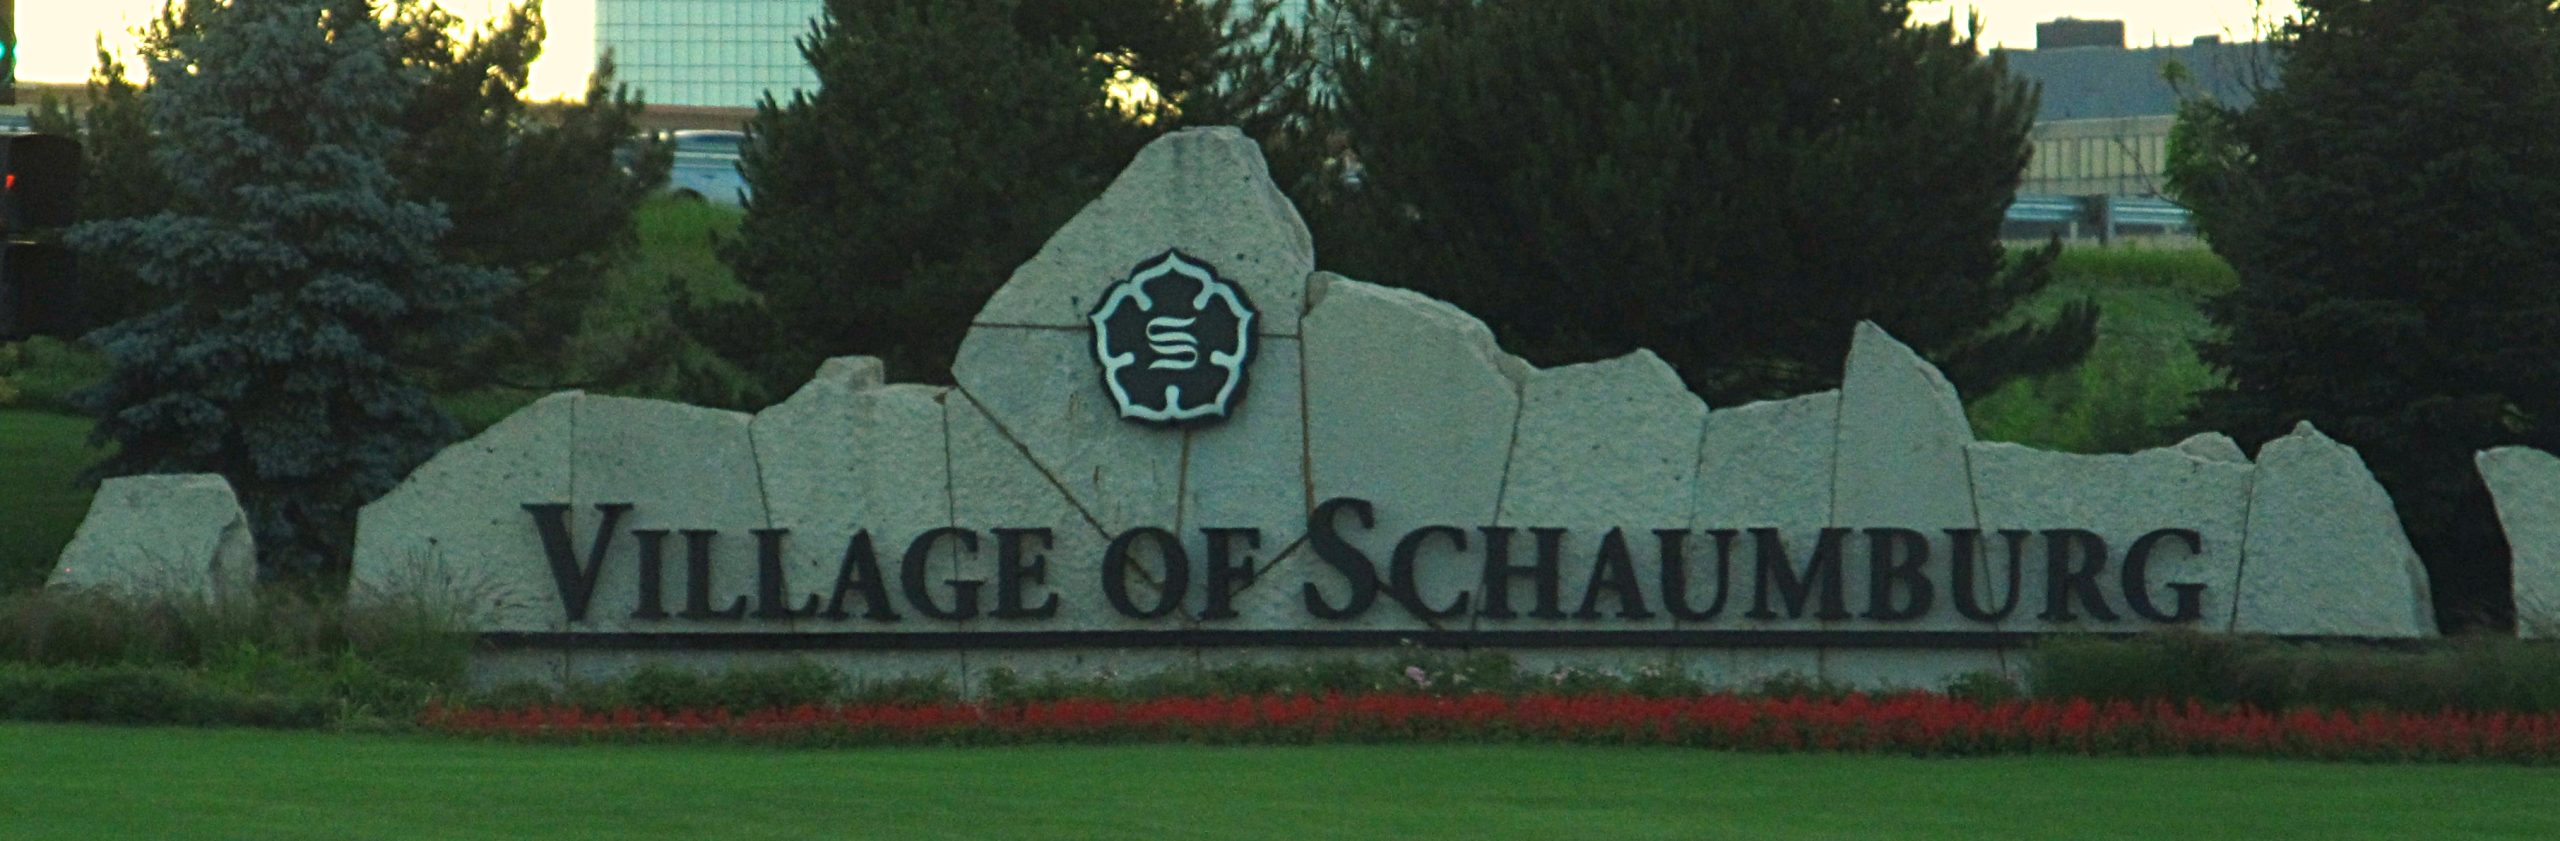 Schaumburg Illinois Welcome Sign